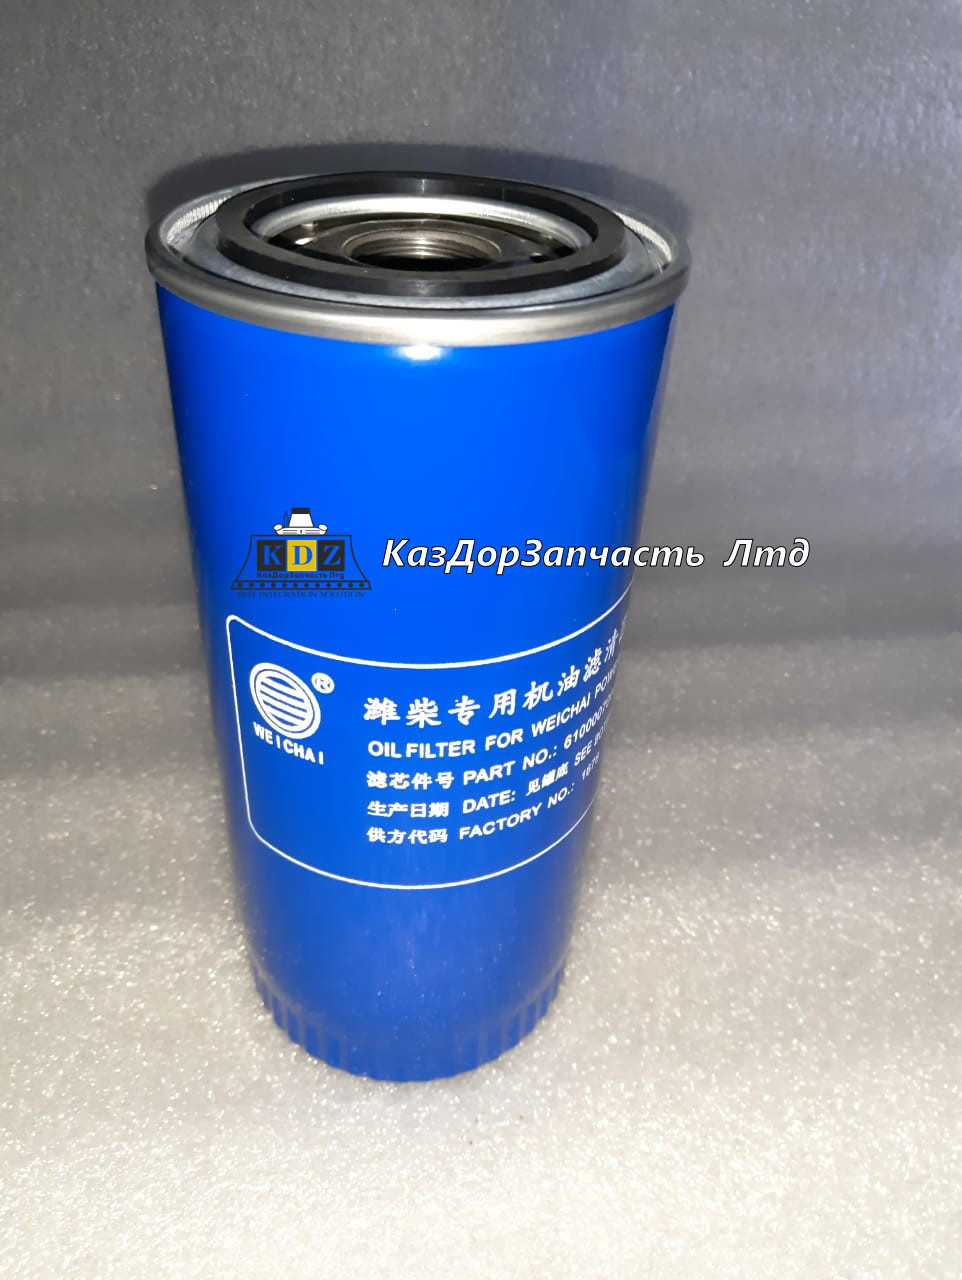 Масляный фильтр JX0818/61000070005 (WeiChai) на ZL50G, BONNY TY165-2 каток